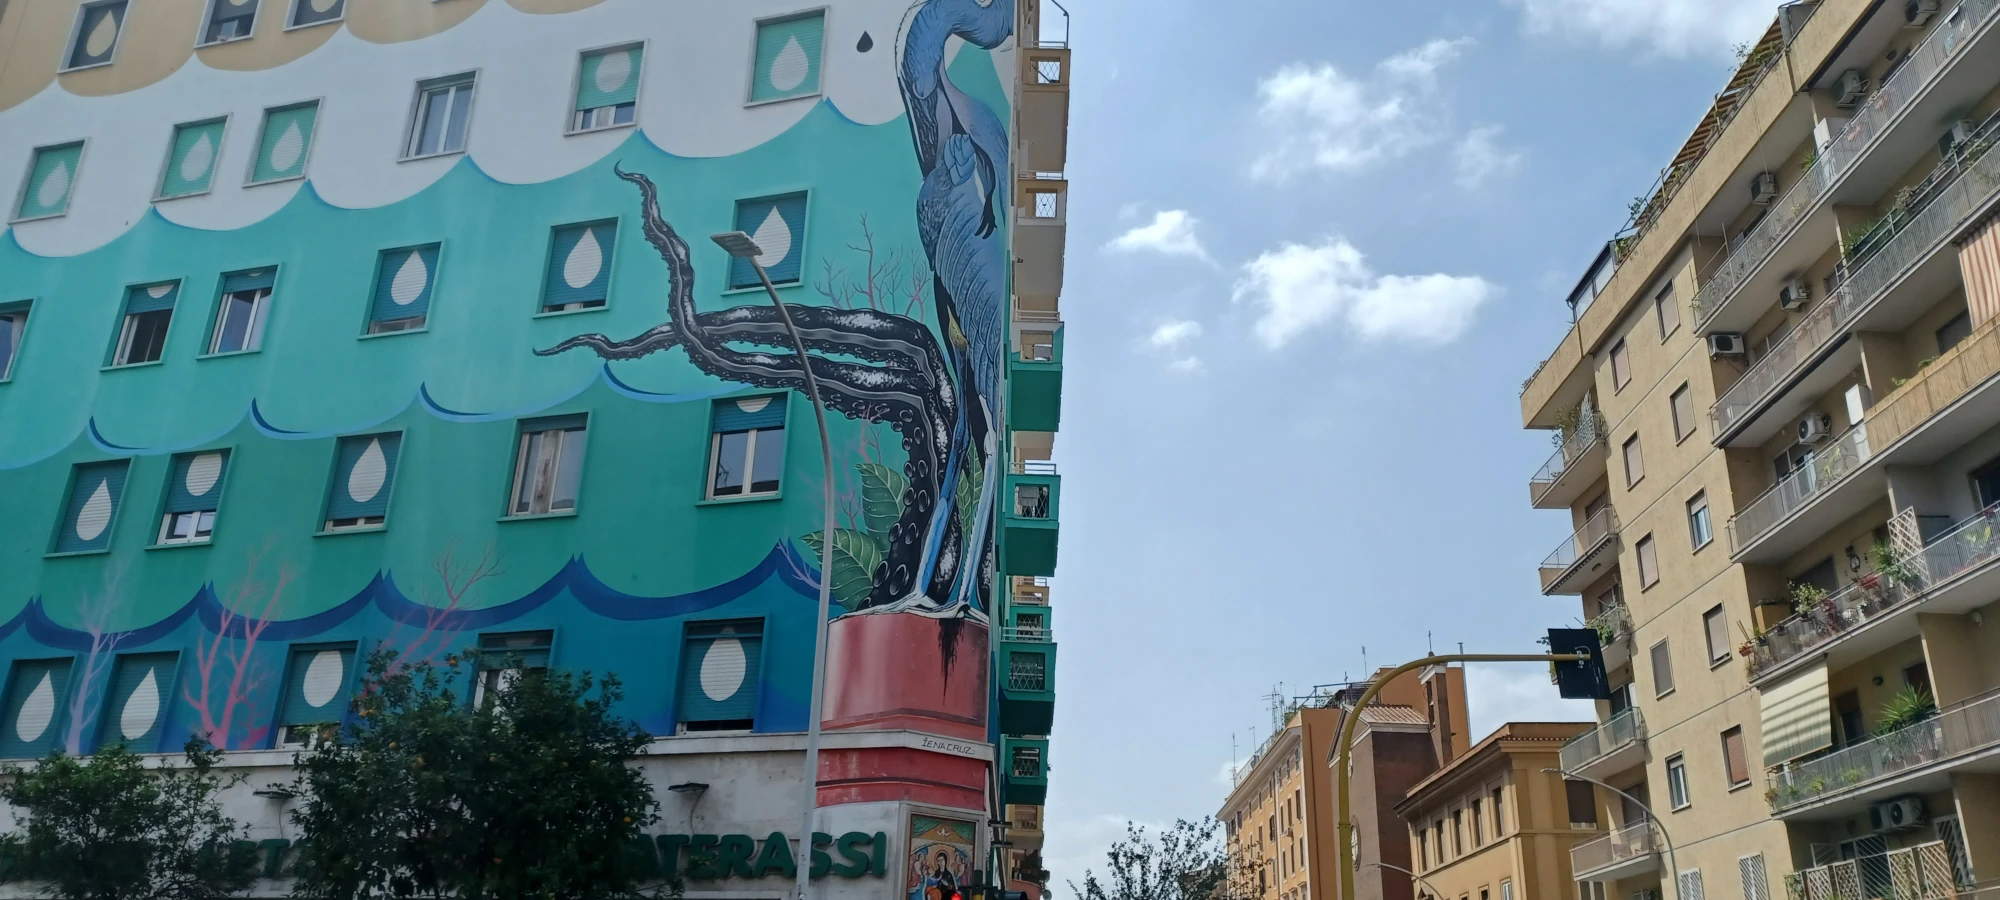 ostiense mural street art